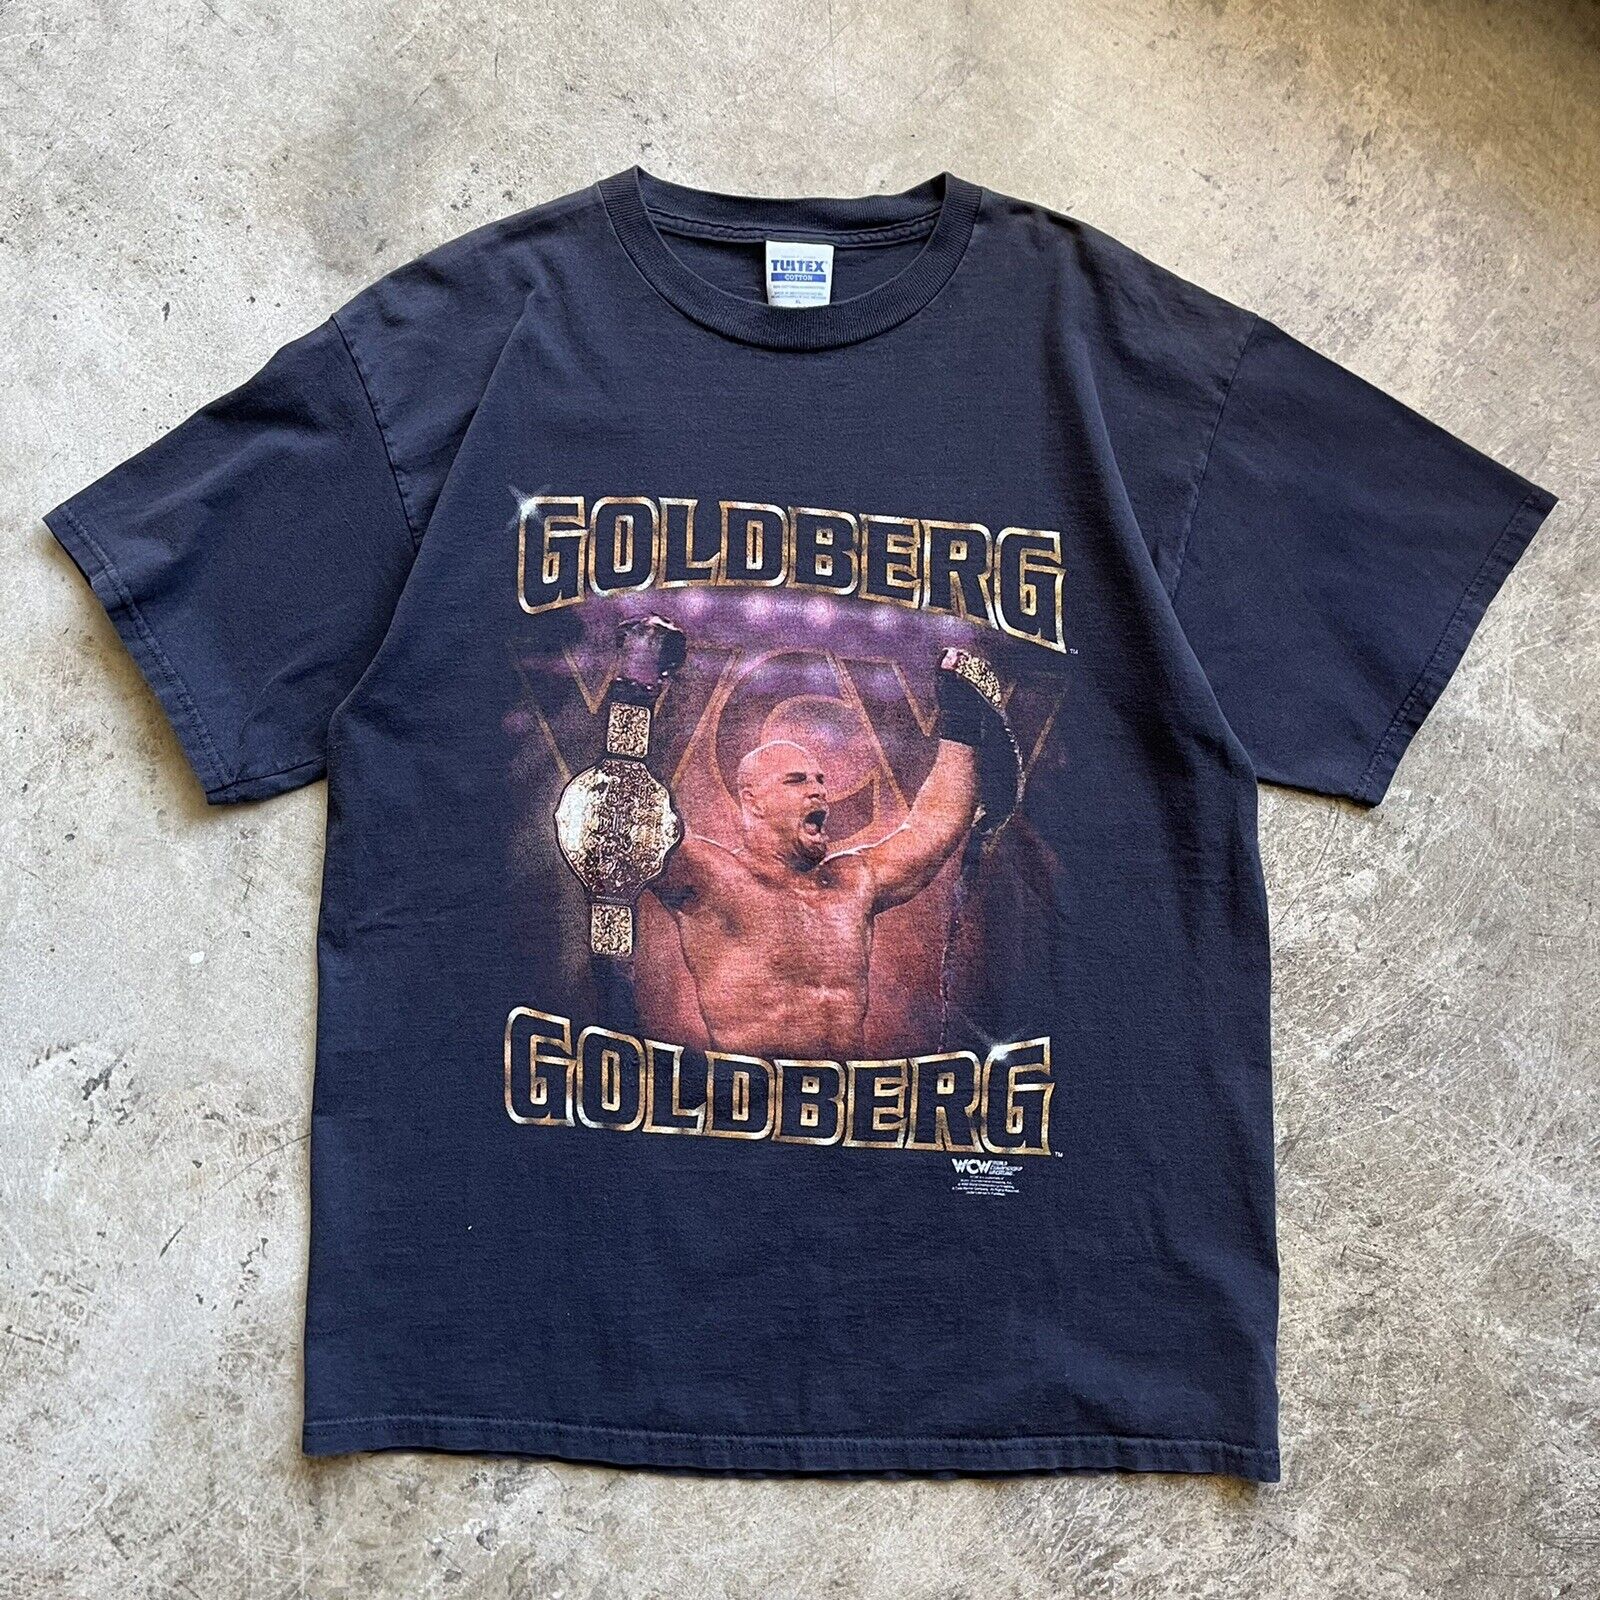 Vintage 1998 Goldberg Shirt WCW Wrestling 90s - image 1